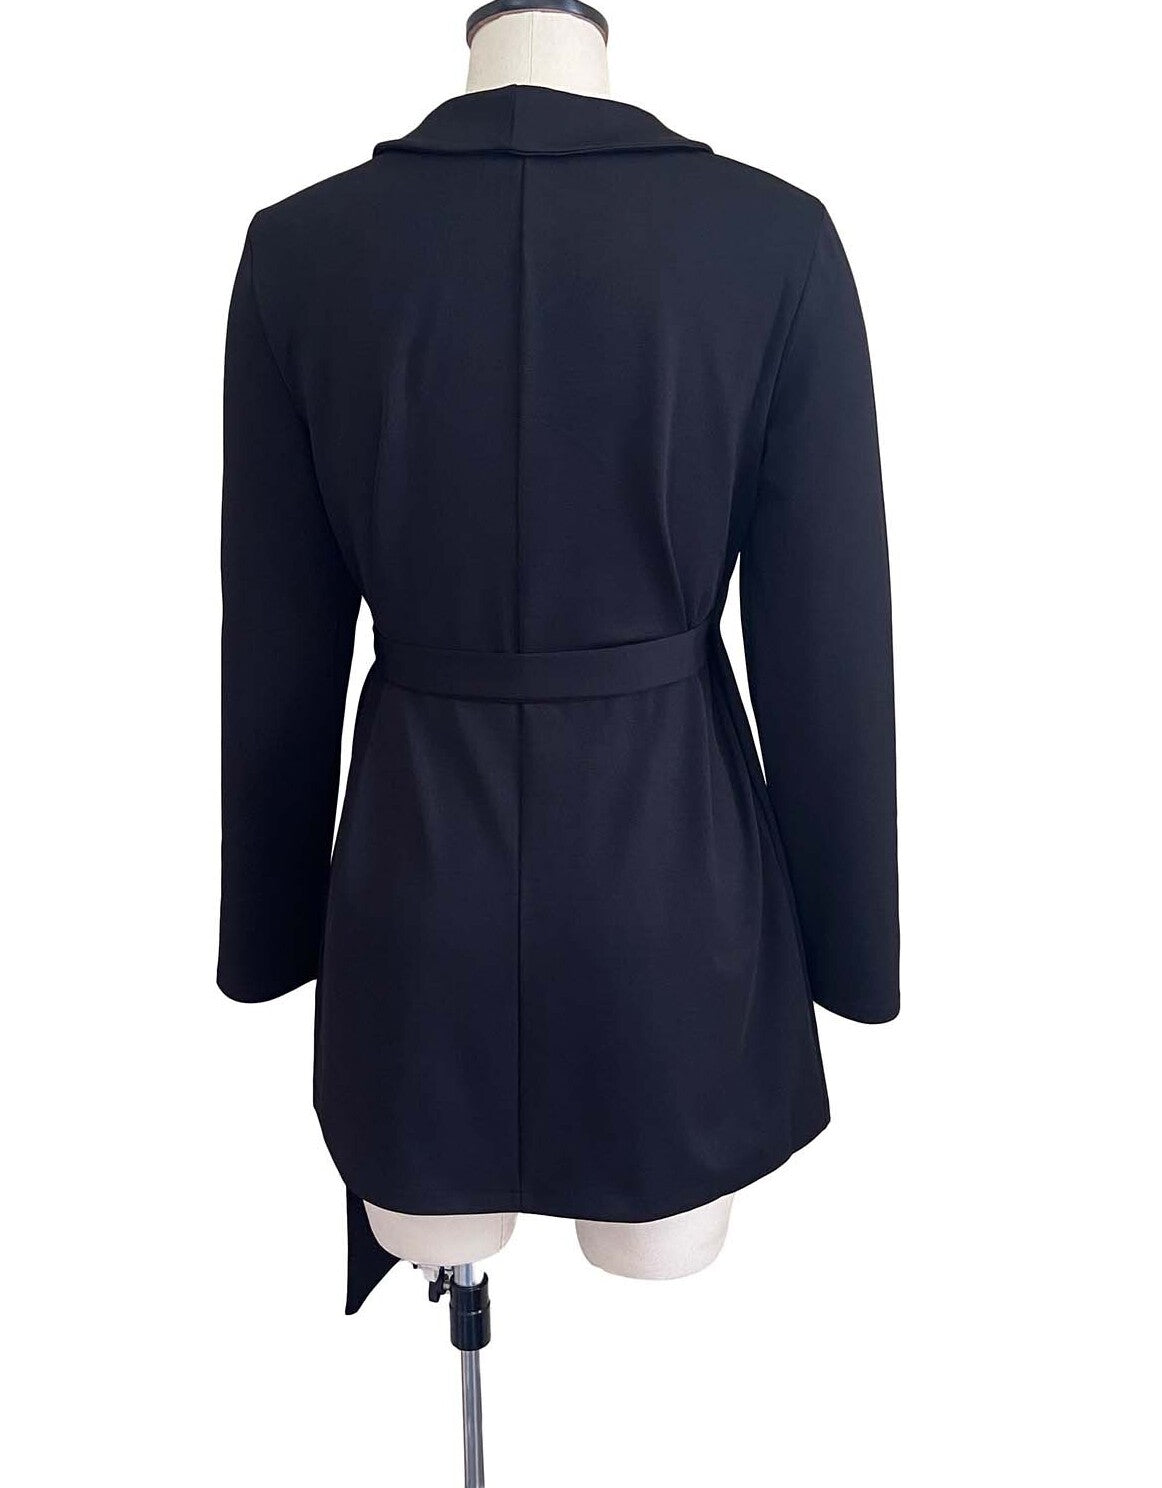 BamBam Fall Professional Black Long Sleeve Knotted Blazer Dress - BamBam